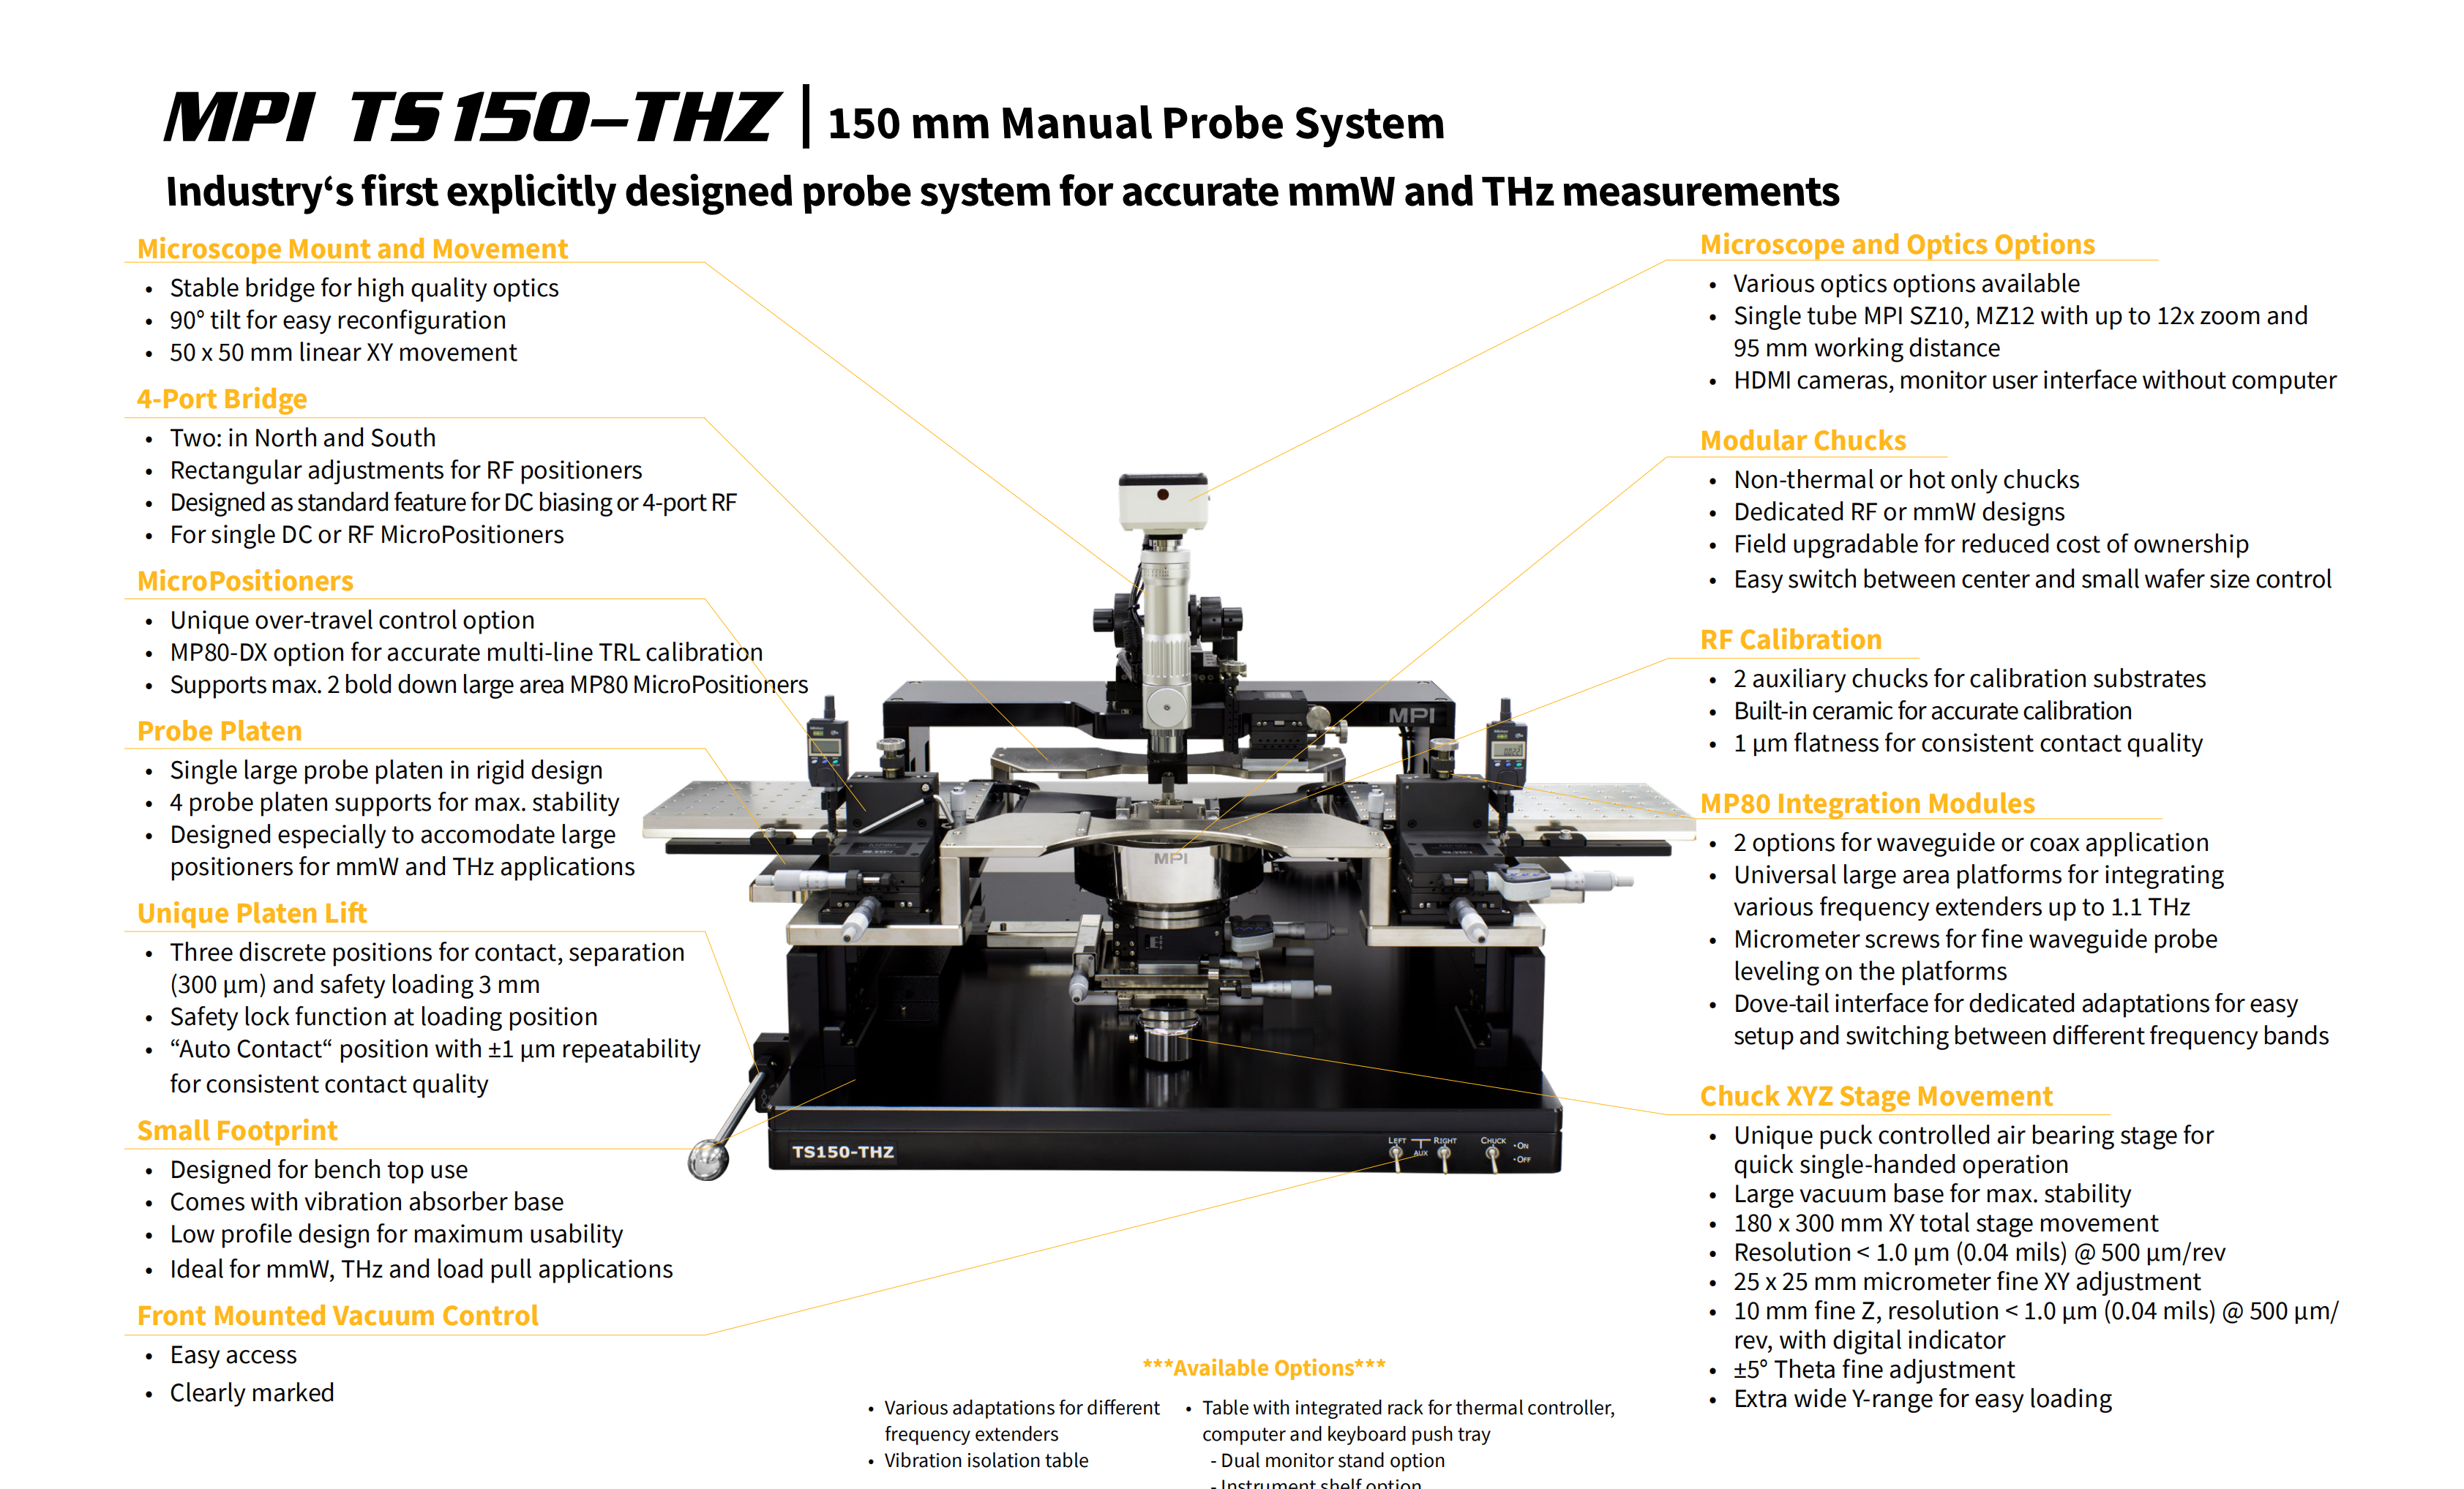 MPI-TS150-THZ-Manual-Probe-System-Fact-Sheet_00.png